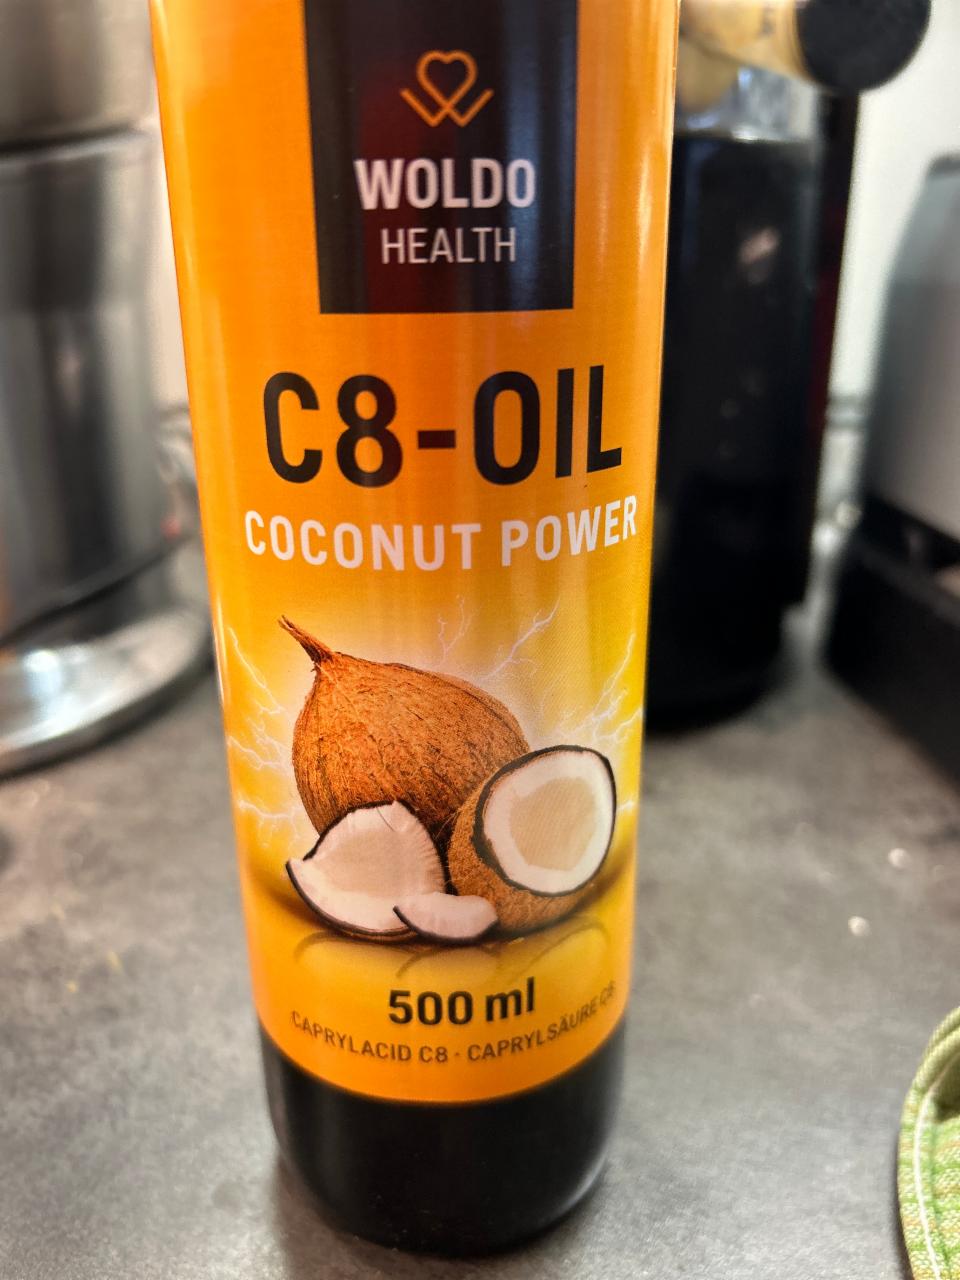 Fotografie - C8 OIL Coconut power WoldoHealth